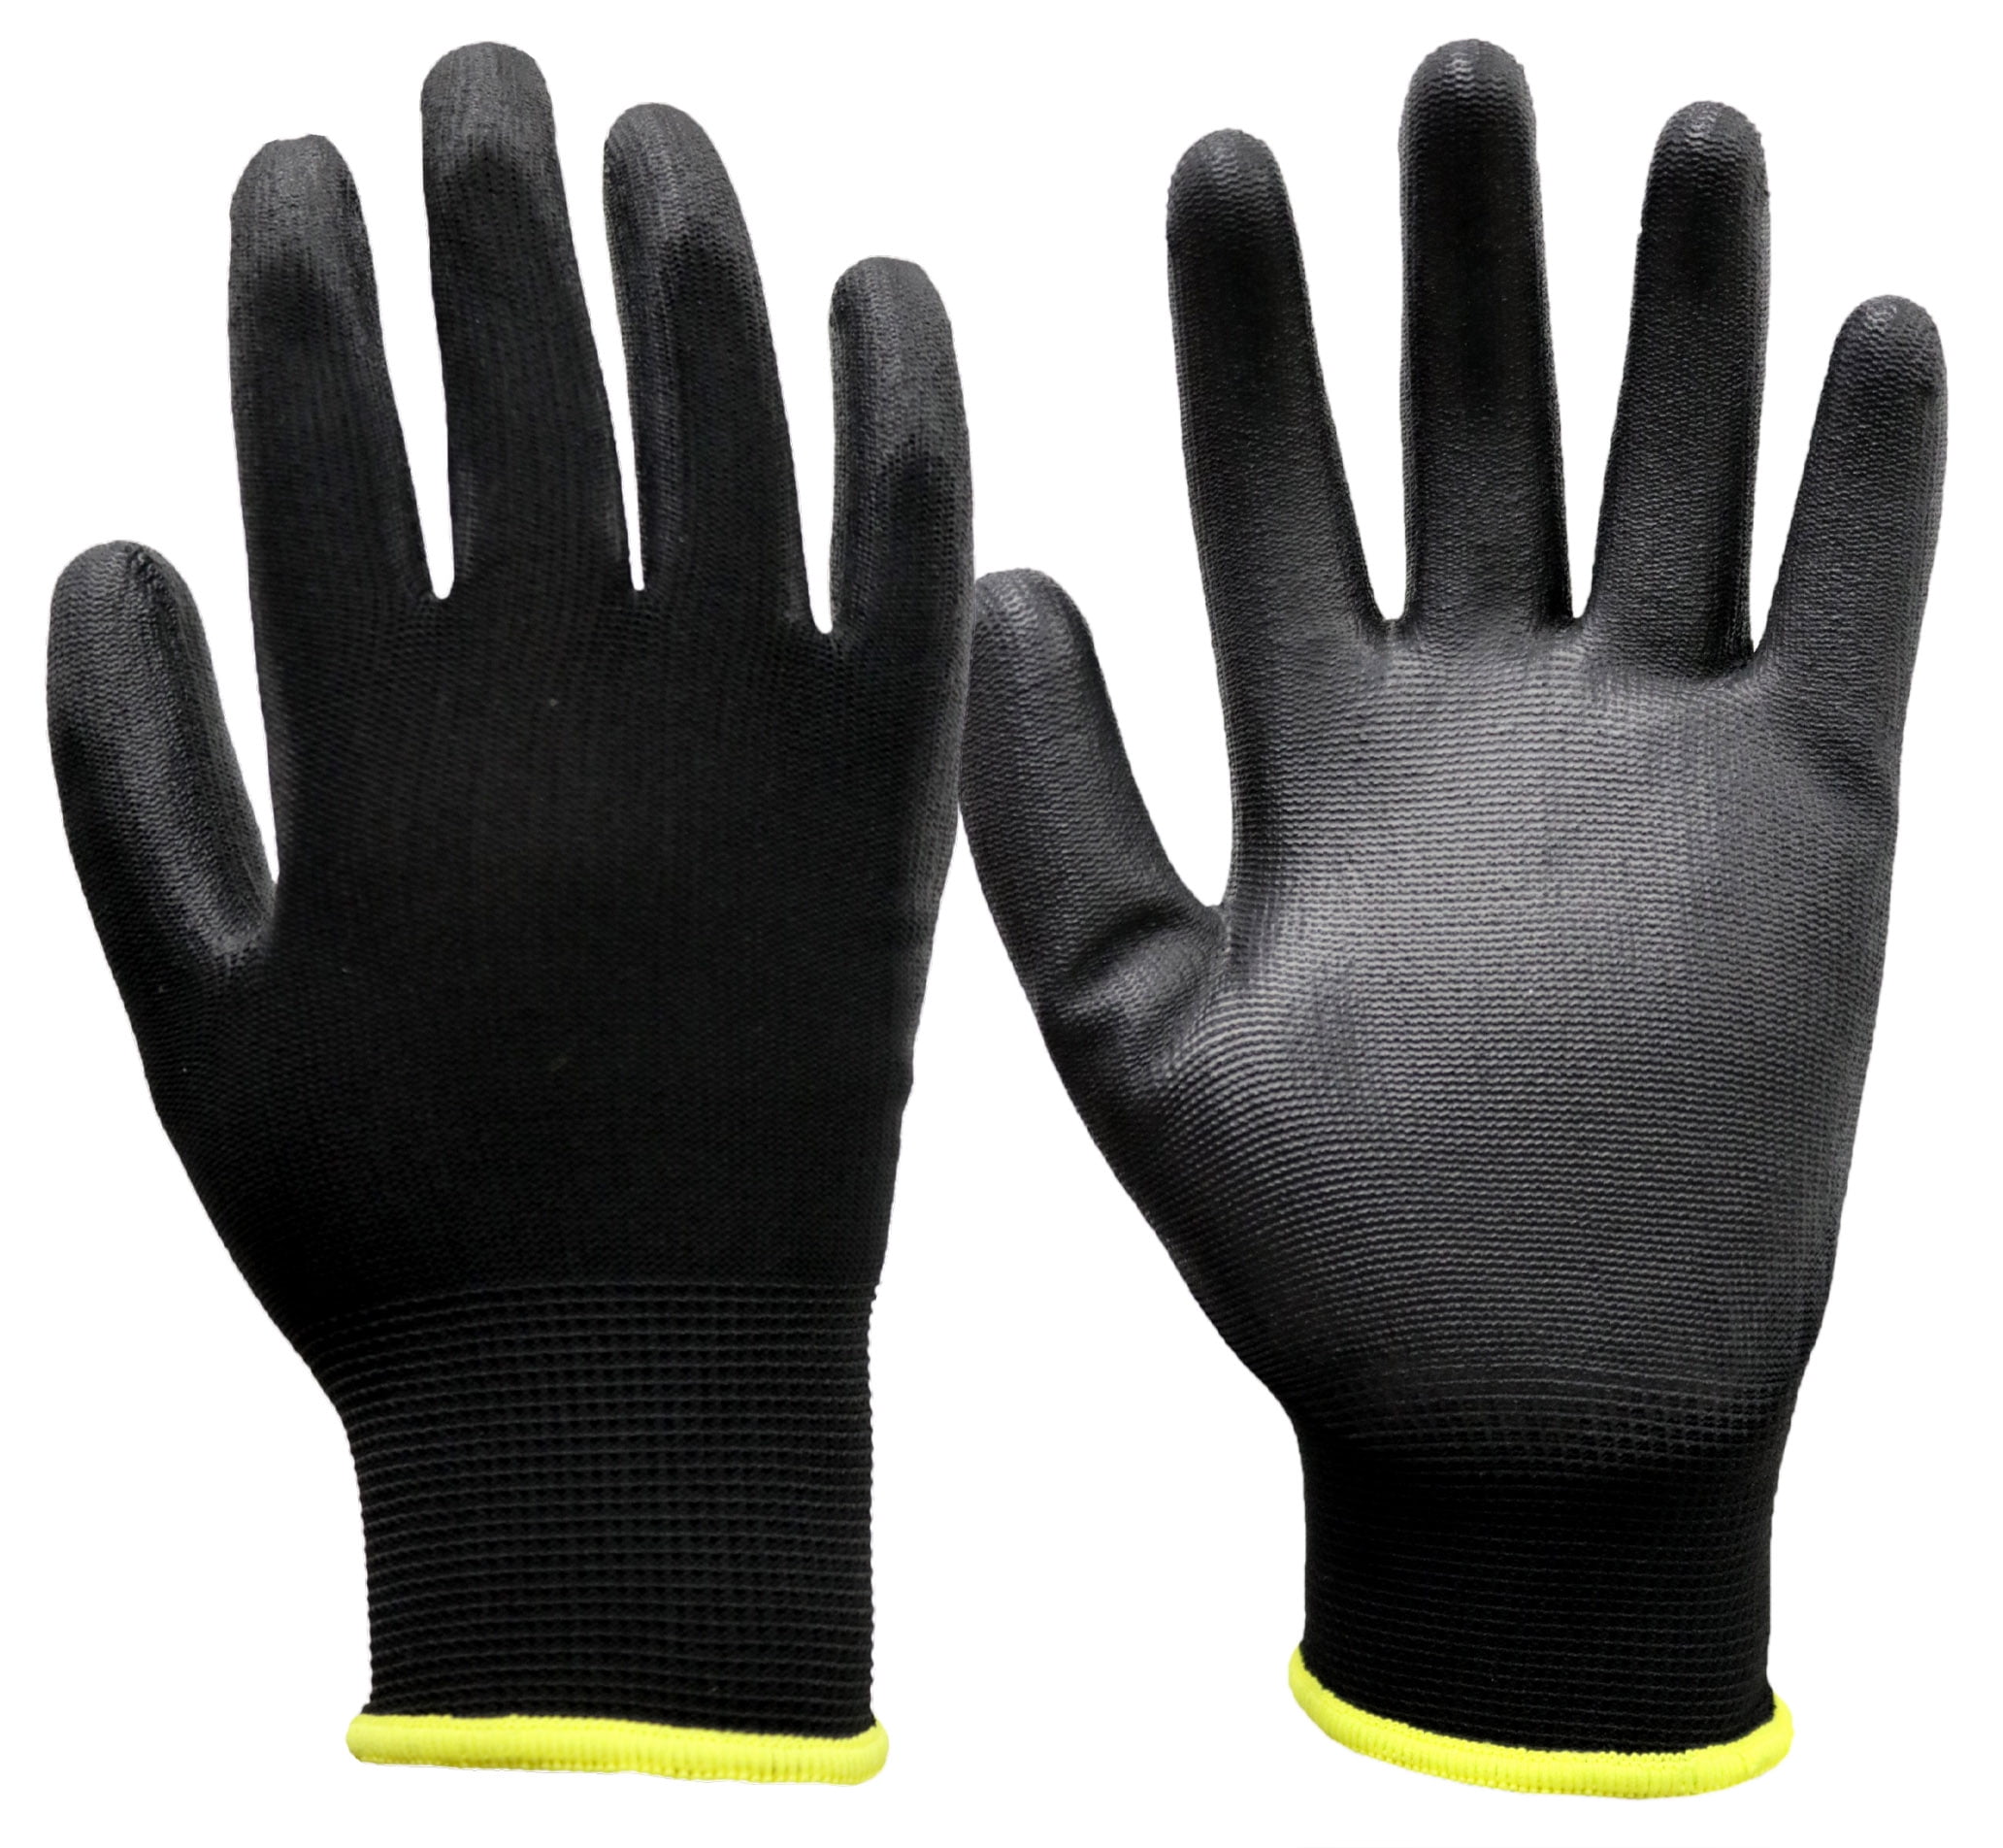 HYPER Tough Multipurpose Nitrile Grip Gloves Large M48a for sale online 